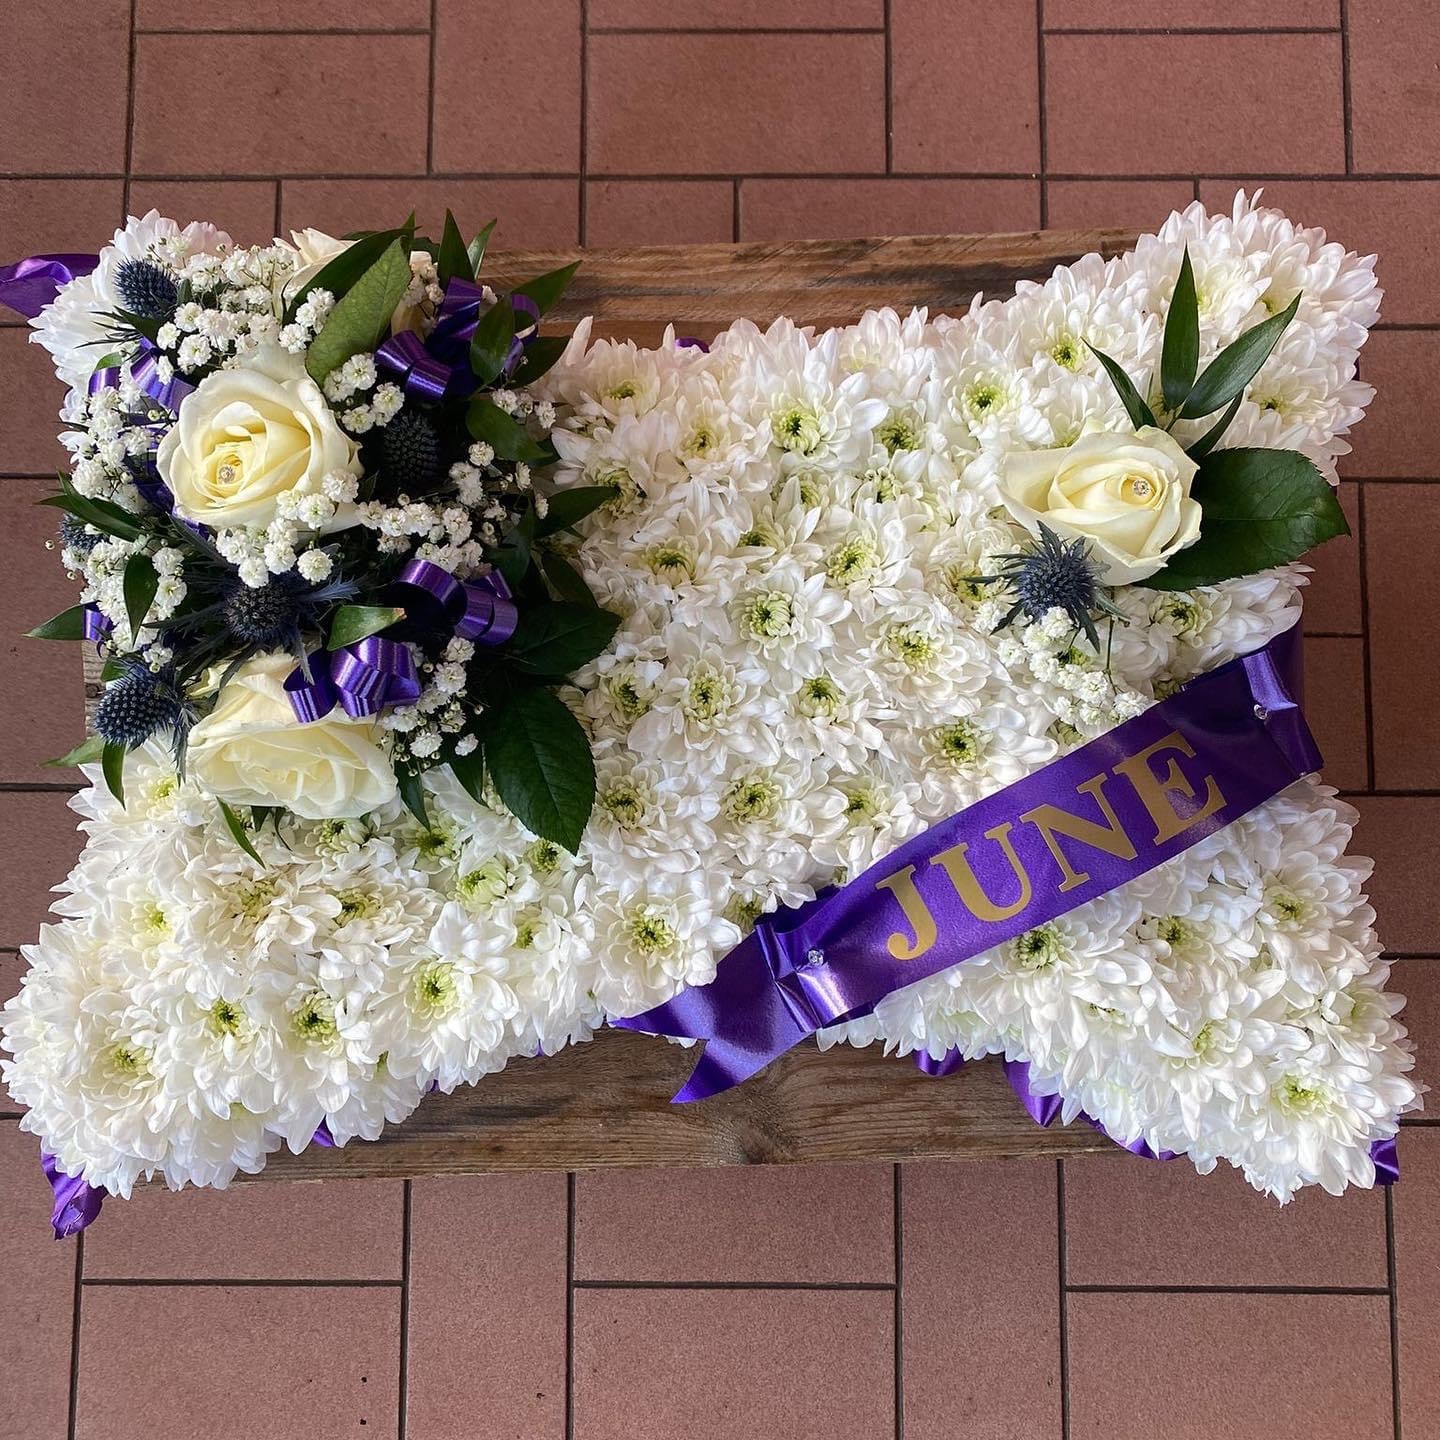 Funeral Flower Arrangements - Based Pillow Funeral Flowers